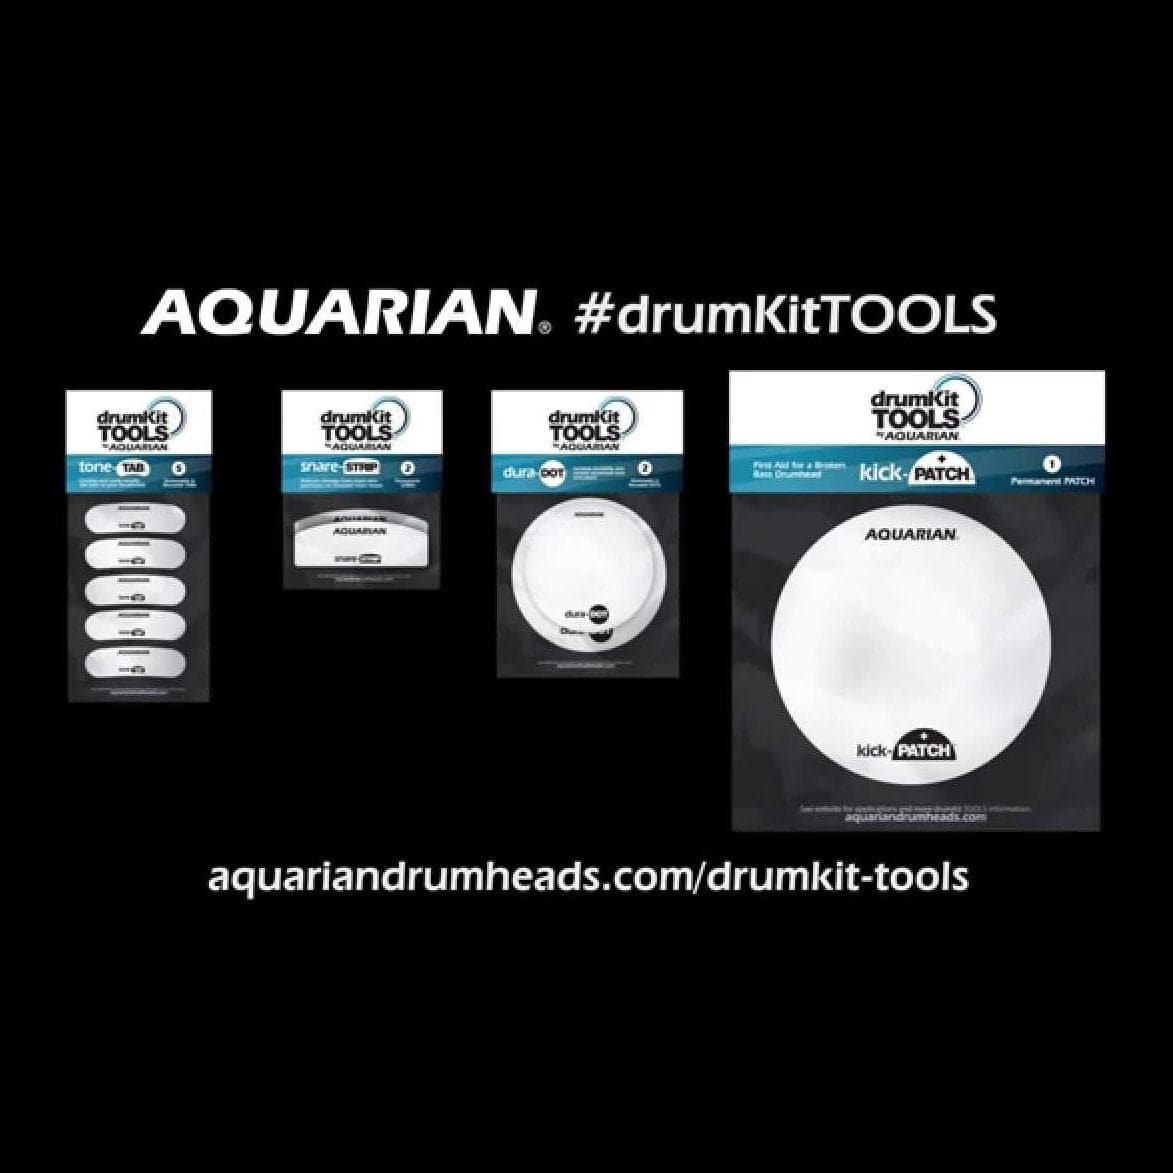 Aquarian duraDOT Tom/Snare Tone Control Patch 2pack